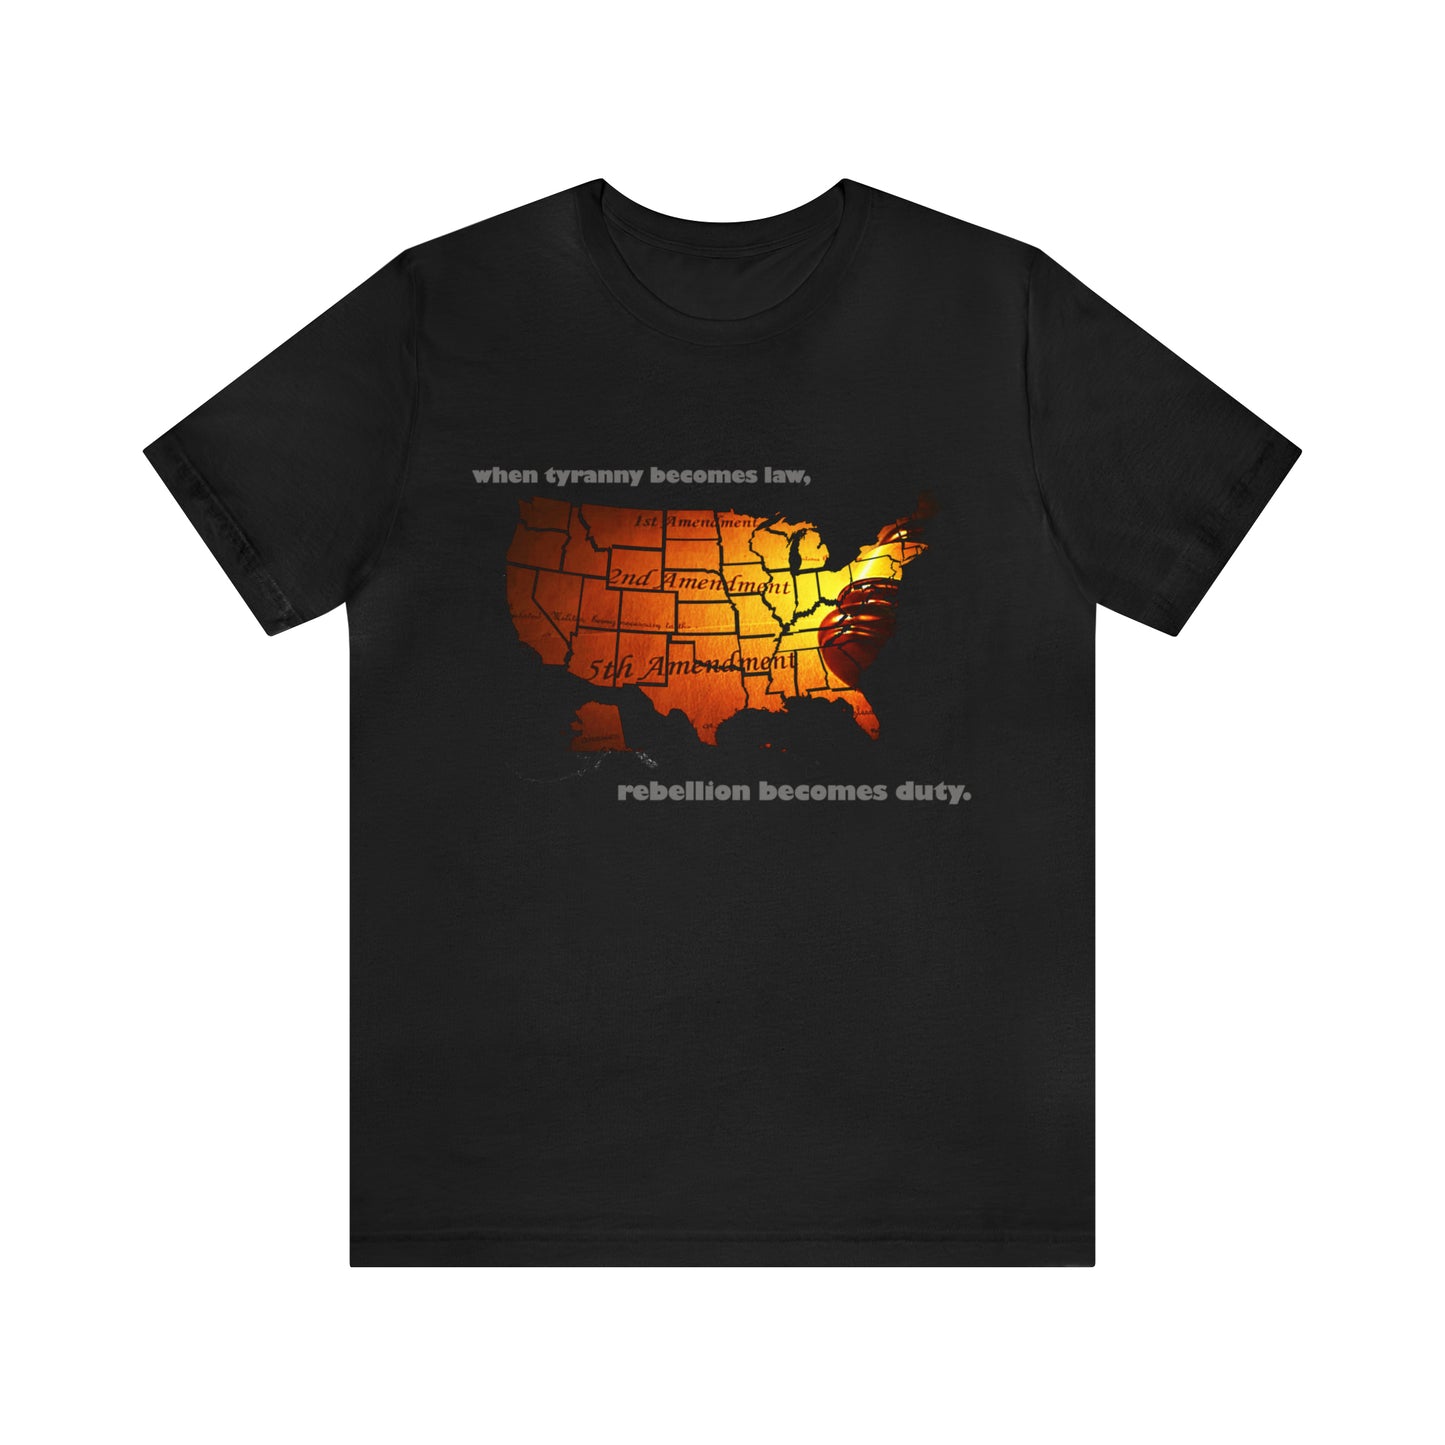 Freedom Tshirt " Tyranny - Rebellion